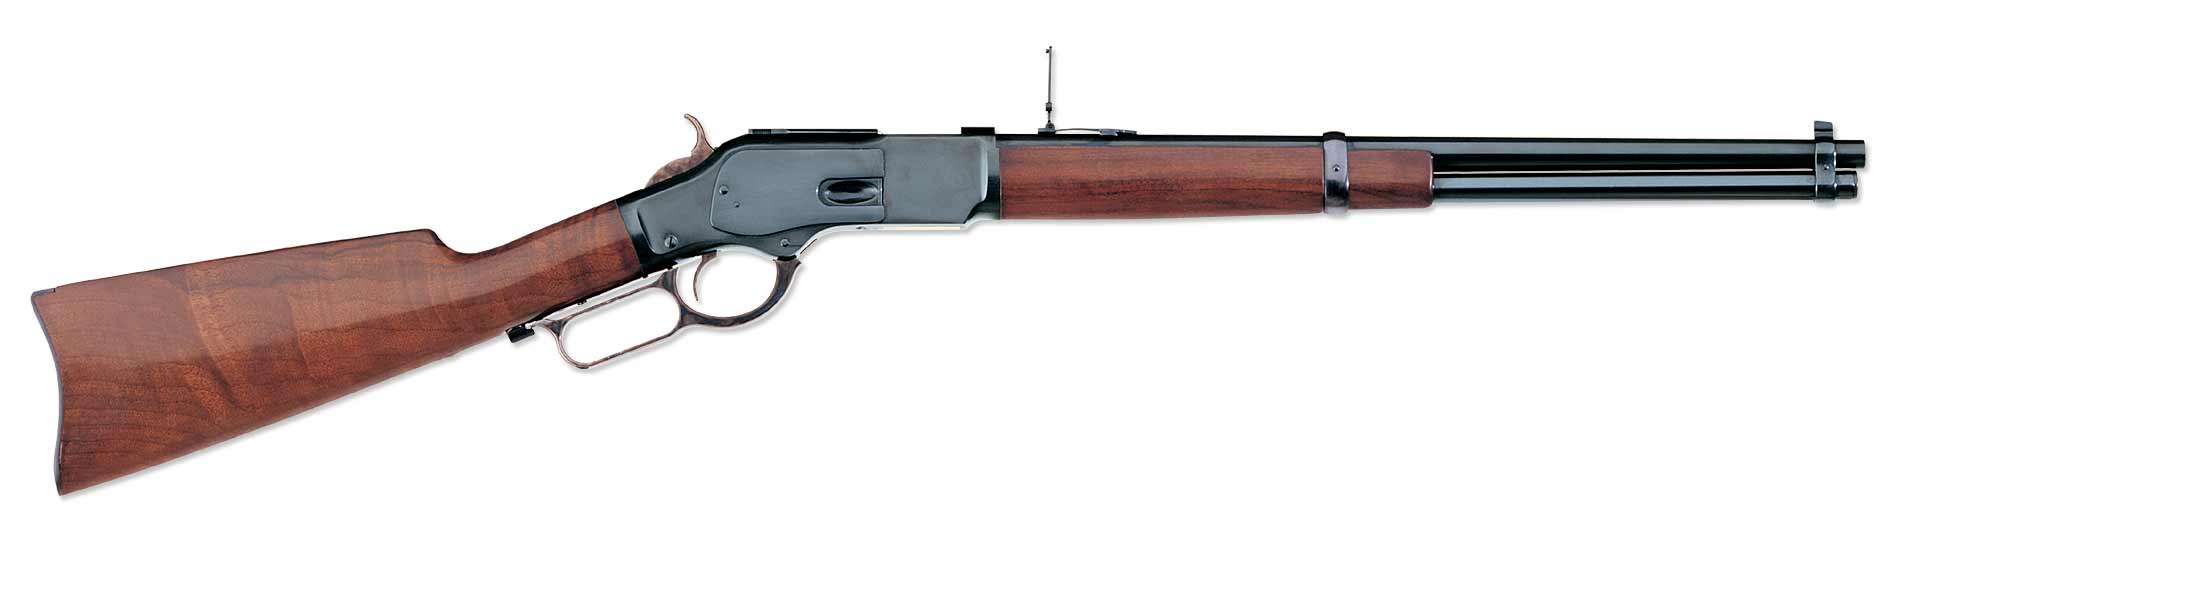 Uberti 1873 Carbine Steel Rifle U342700, .357 Magnum, 19", A Grade Stock